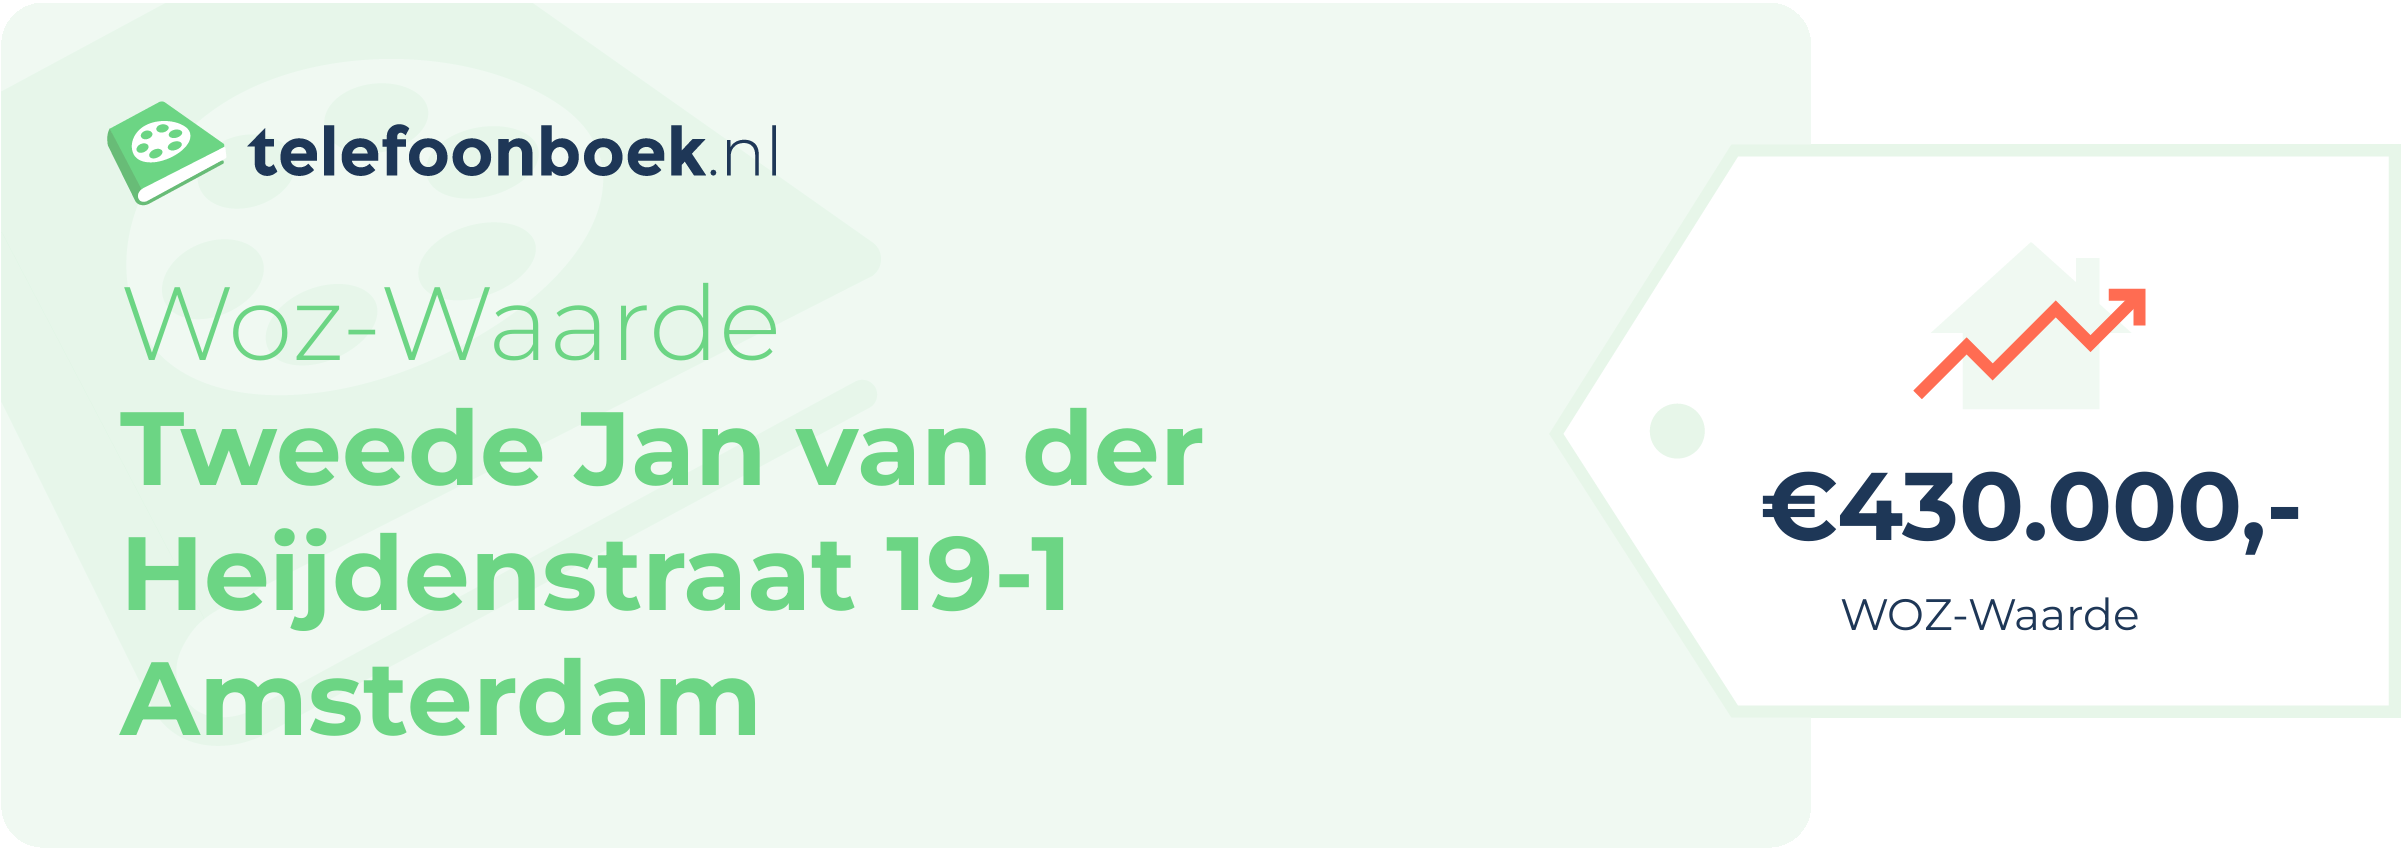 WOZ-waarde Tweede Jan Van Der Heijdenstraat 19-1 Amsterdam